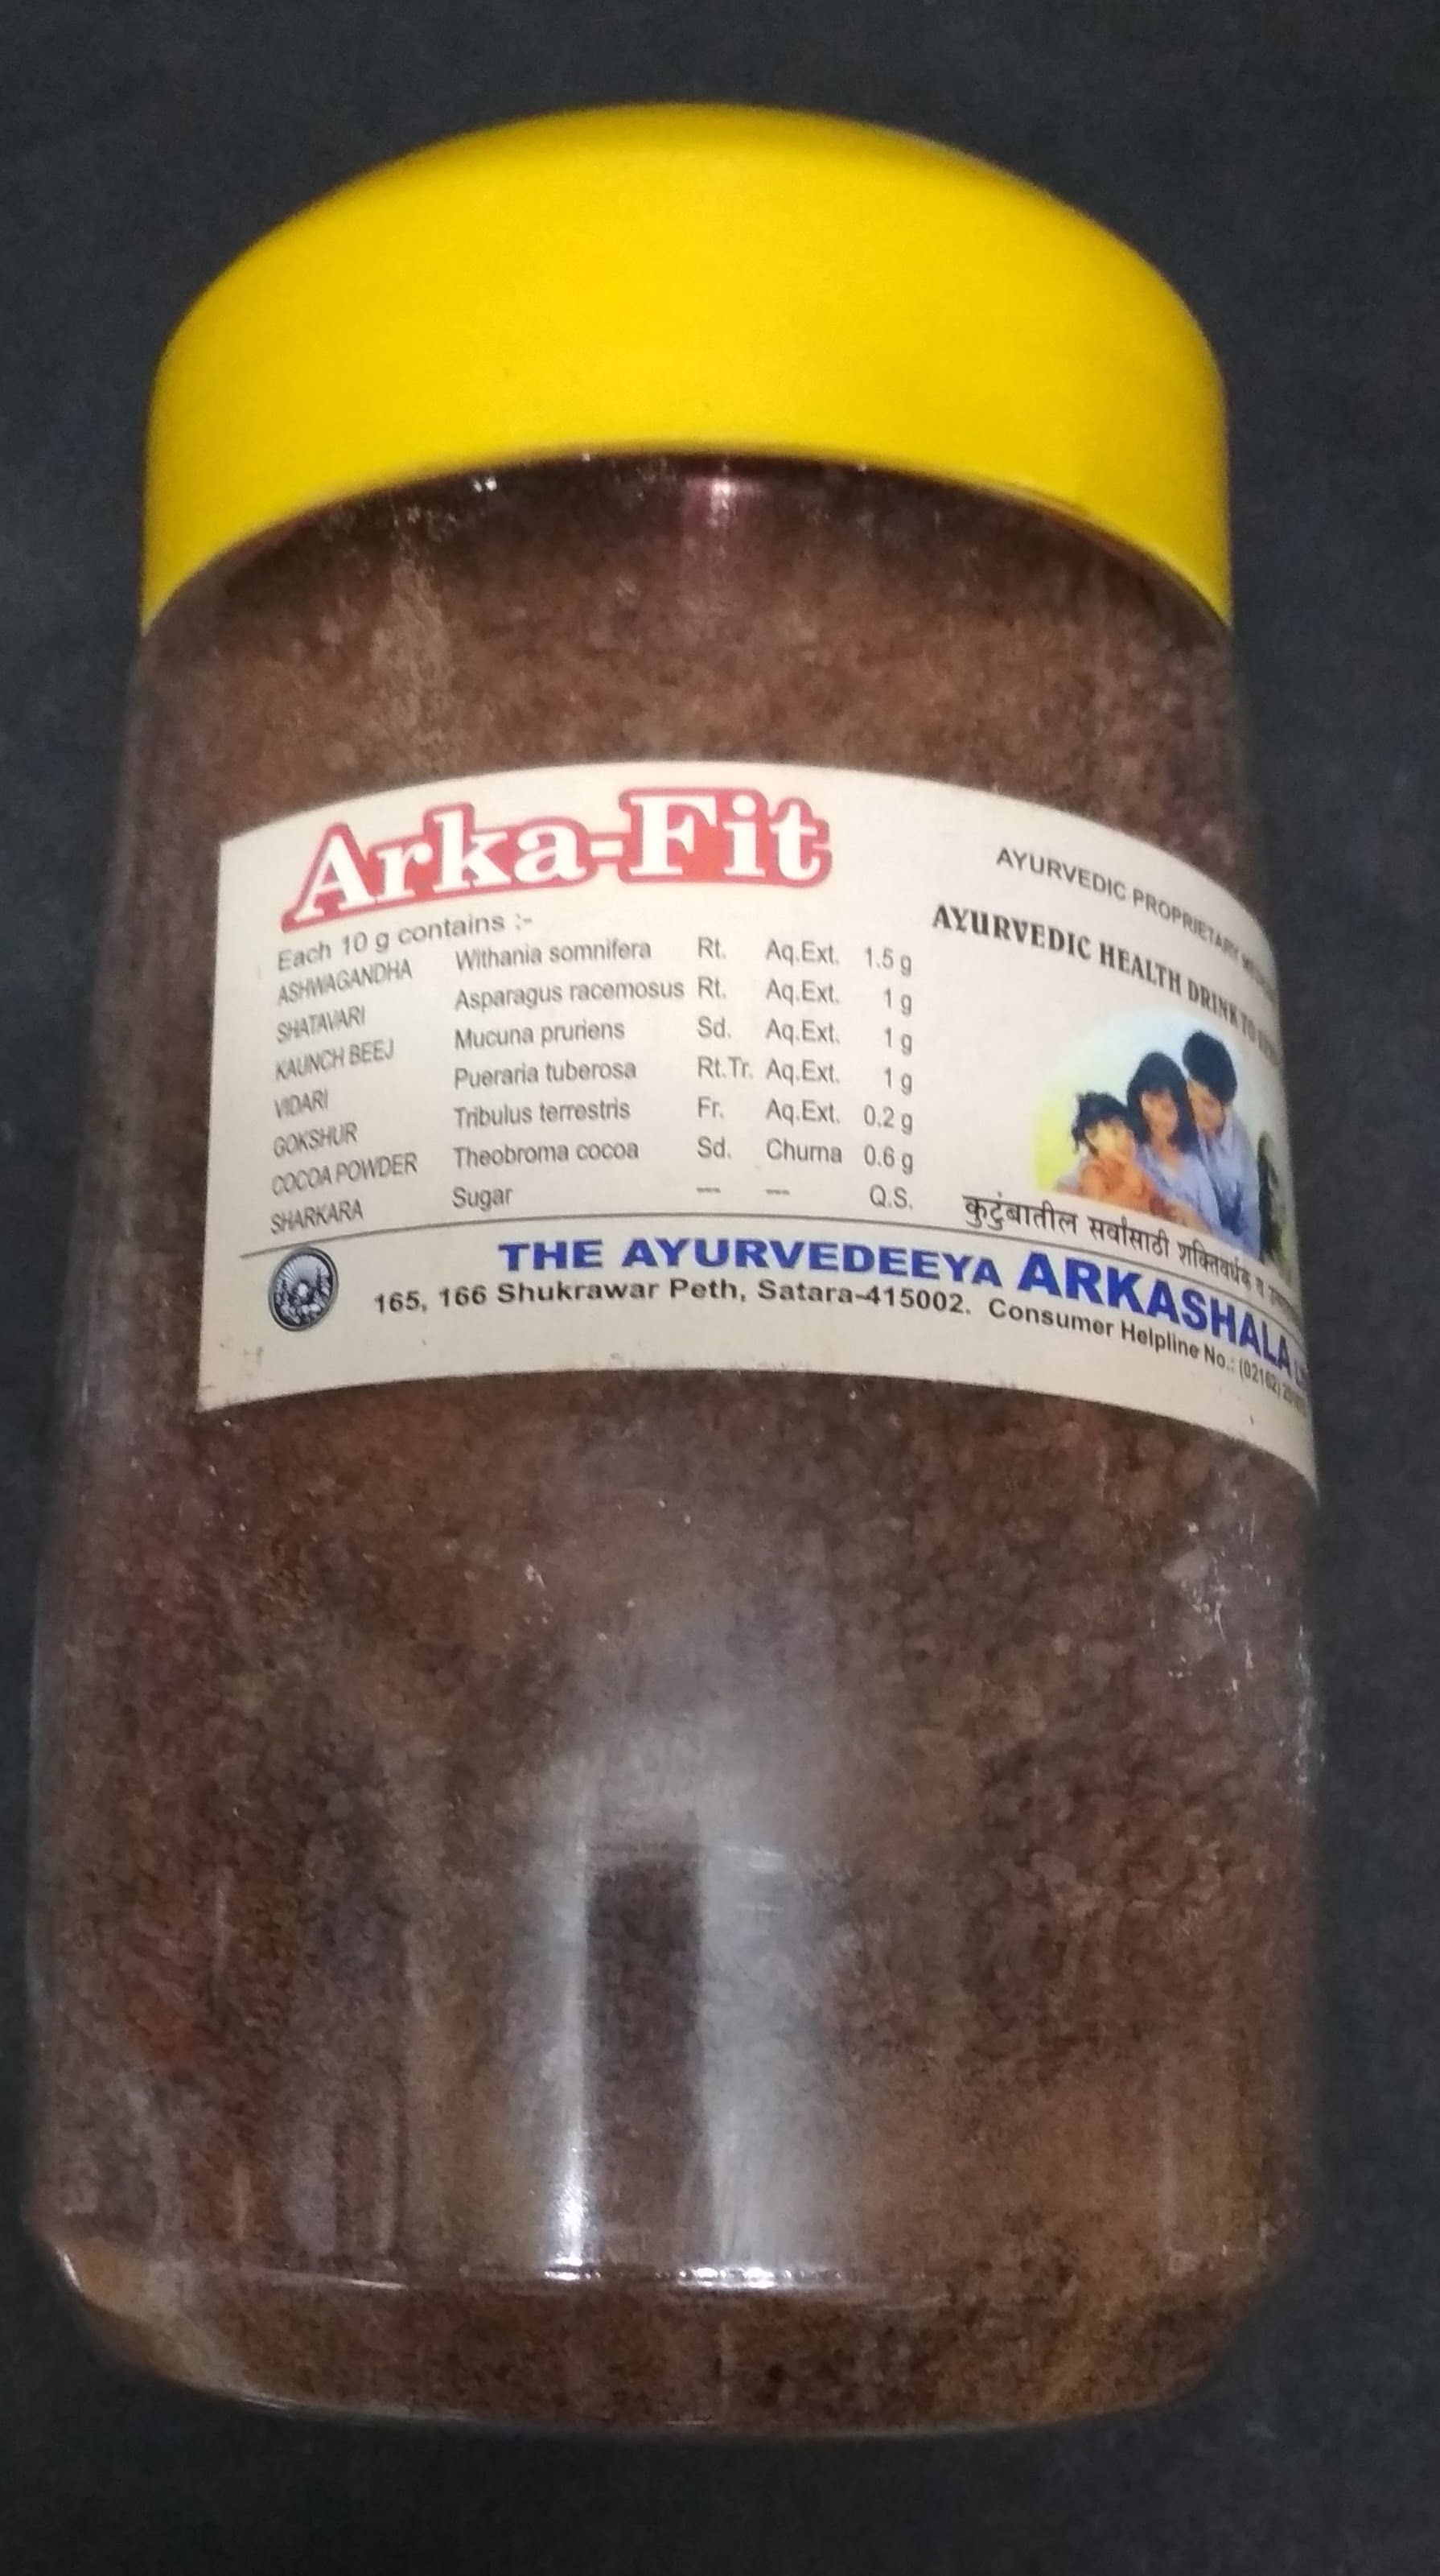 arkafit 200 gm upto 15% off The Ayurveda Arkashala